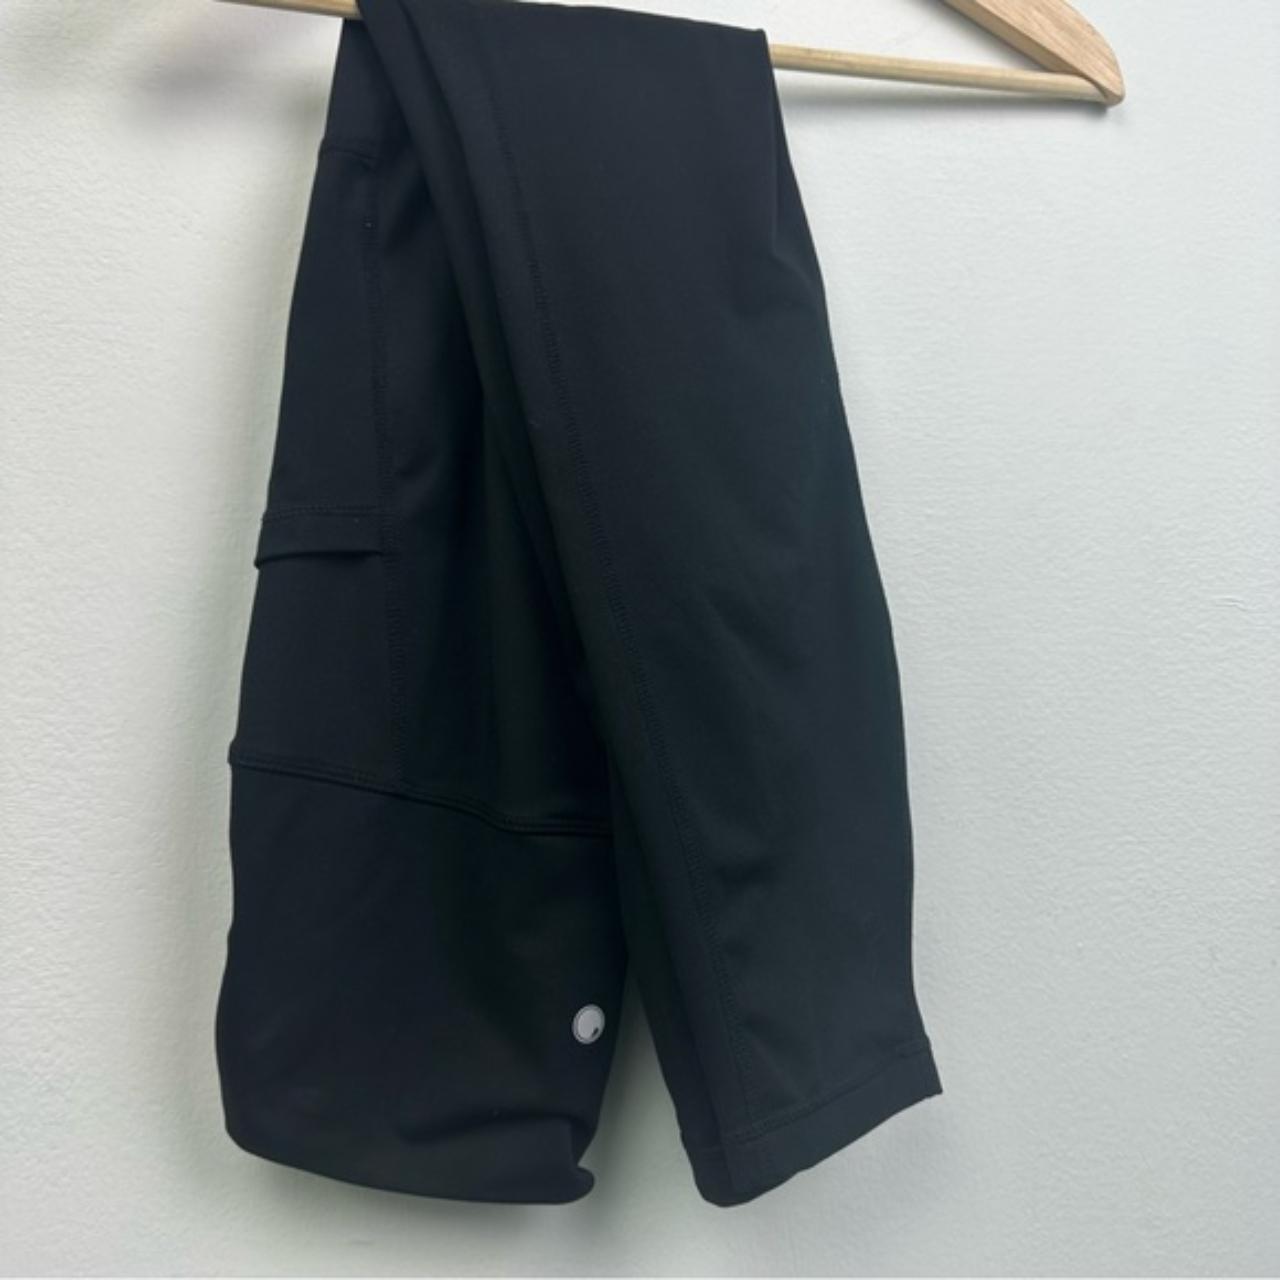 Yogalicious Lux High Waist Black leggings Size - Depop